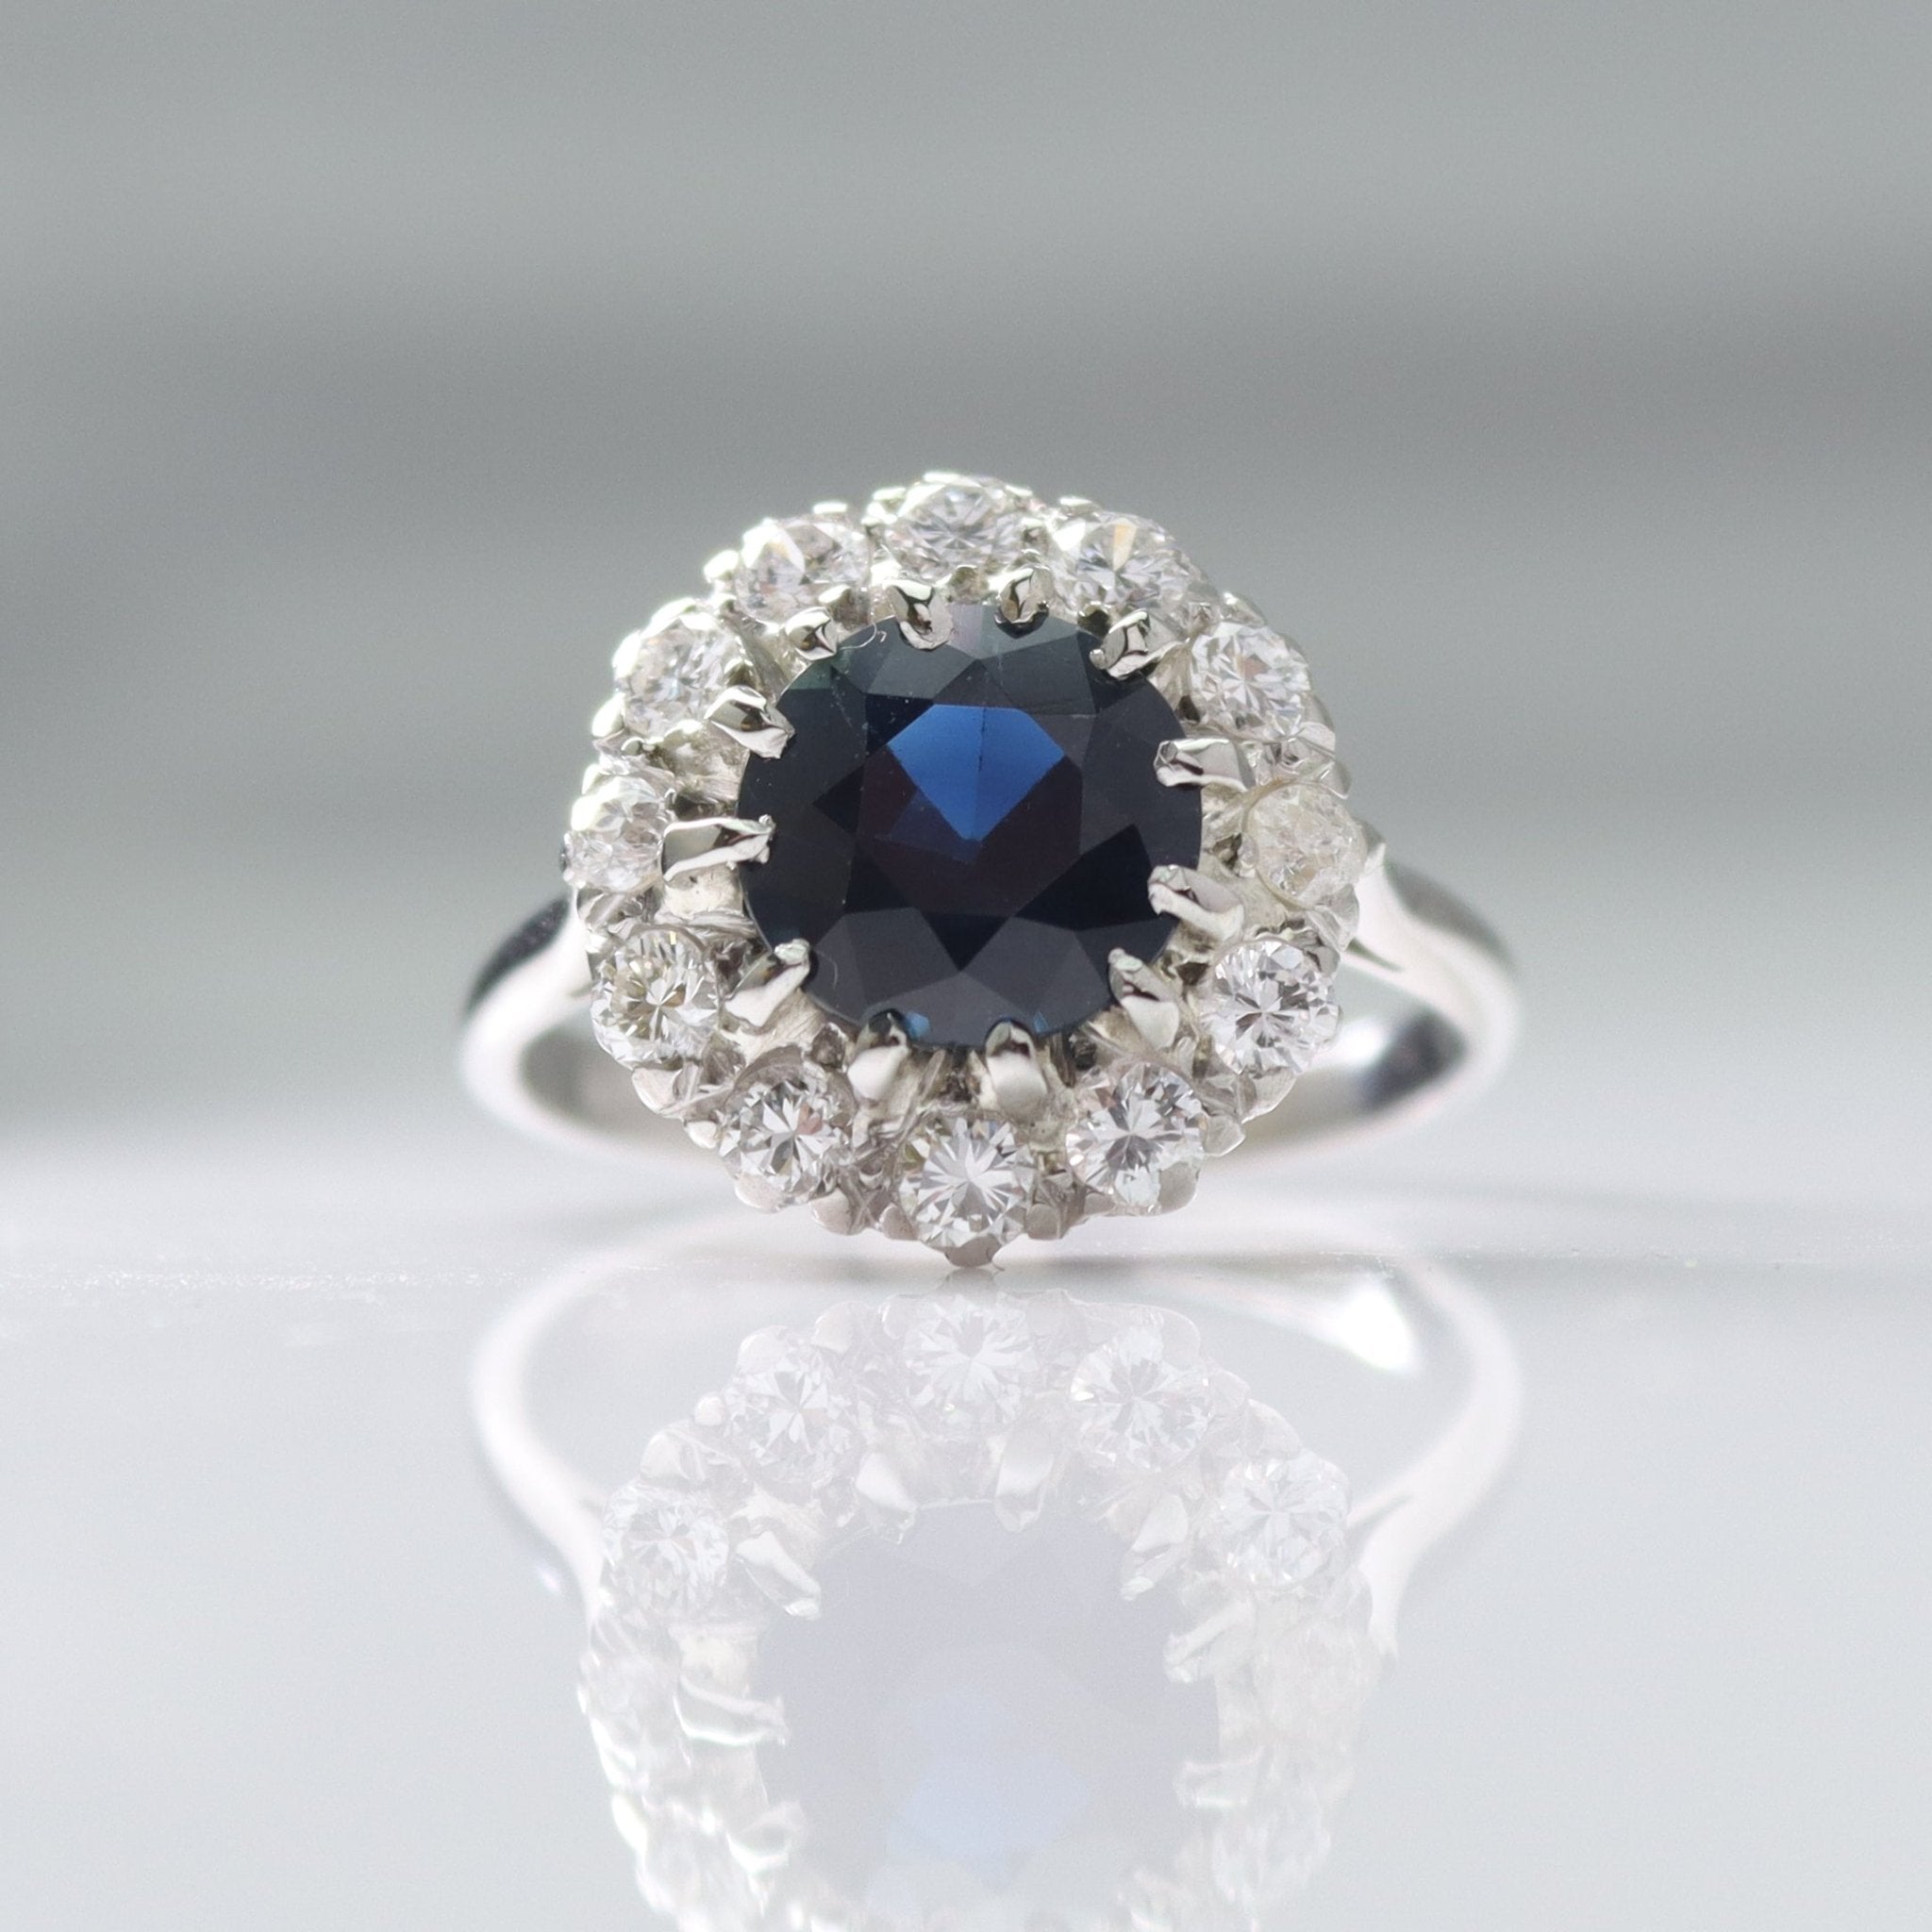 Shop Vintage & Antique Sapphire Rings at Friar House